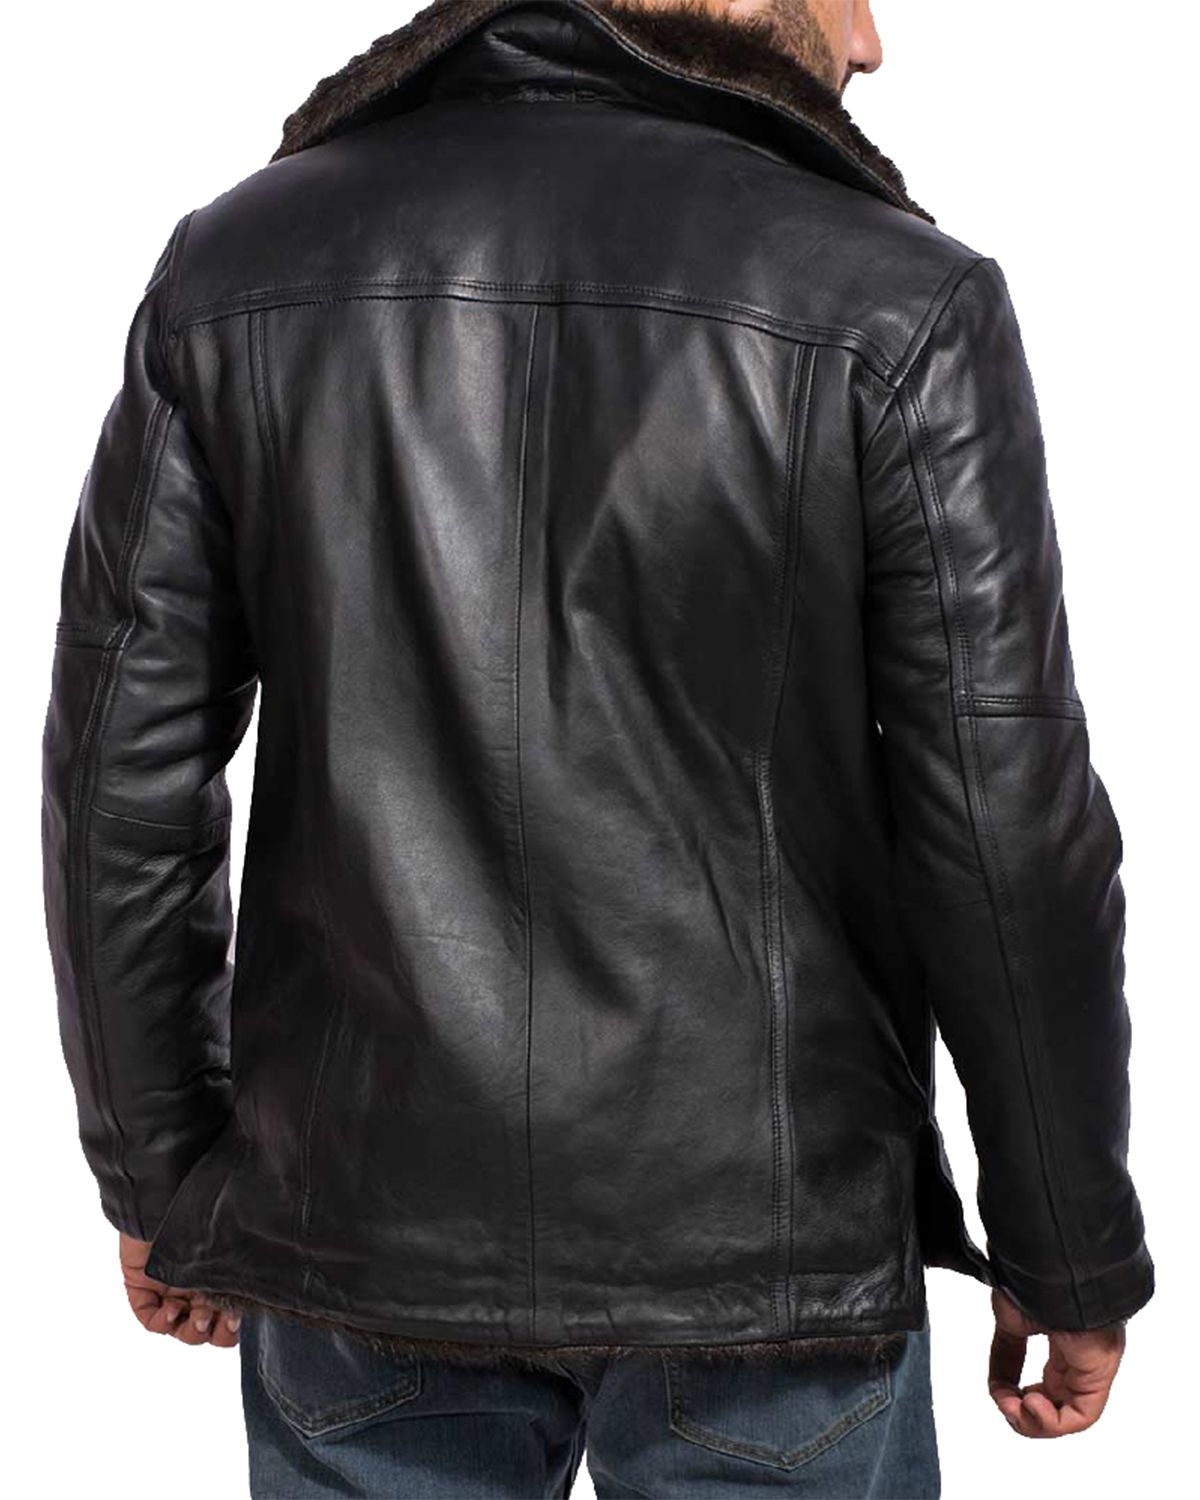 best winter jacket for men bomber jacket men black shearling jacket men warm fur jacket men raf jacket men winter jacket 2023 genuine leather jacket men